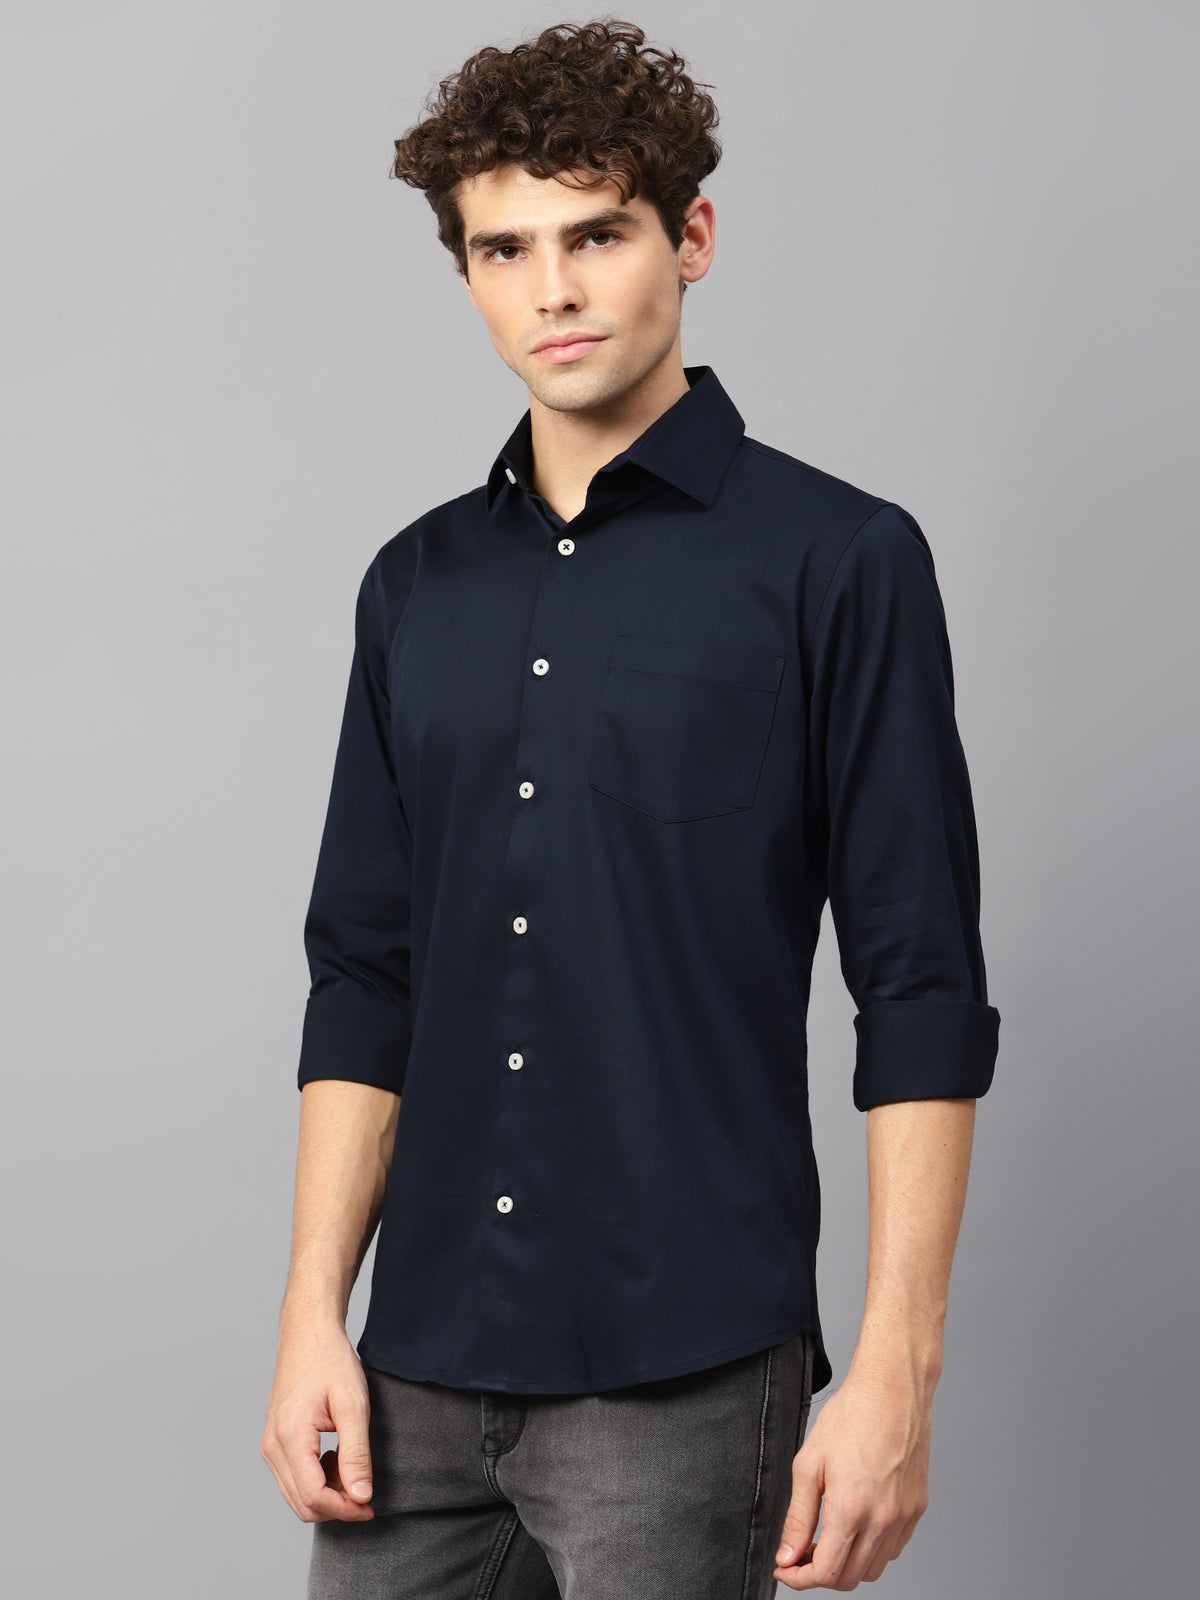 Premium Cotton Lycra Satin Navy Shirt